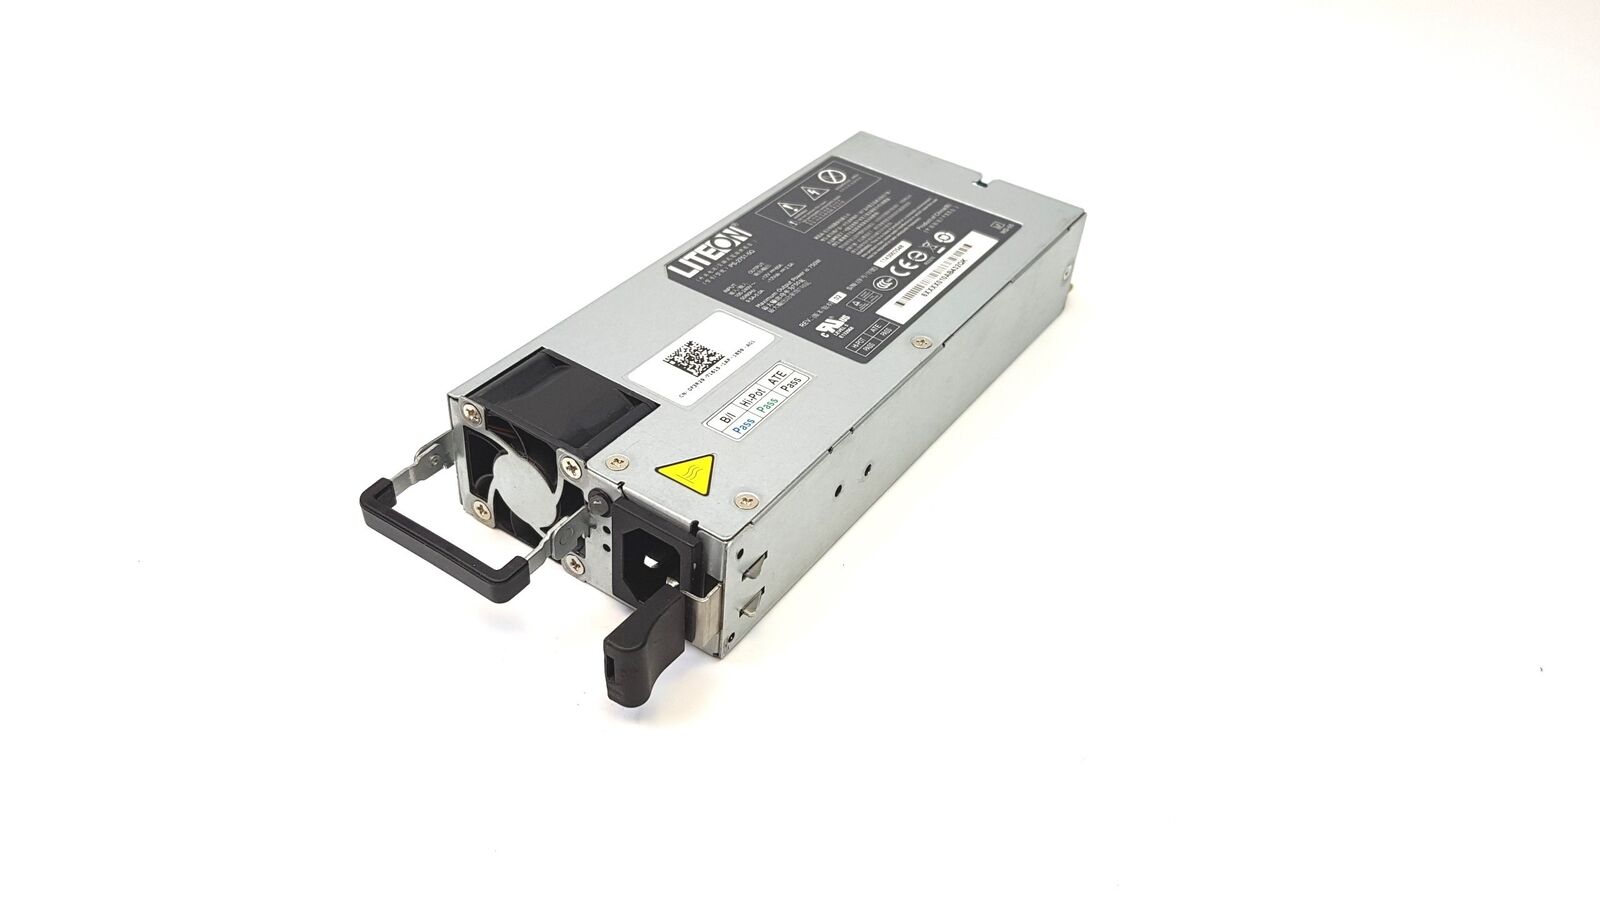 Liteon Dell PowerEdge C2100 750W Power Supply PS-2751-5Q